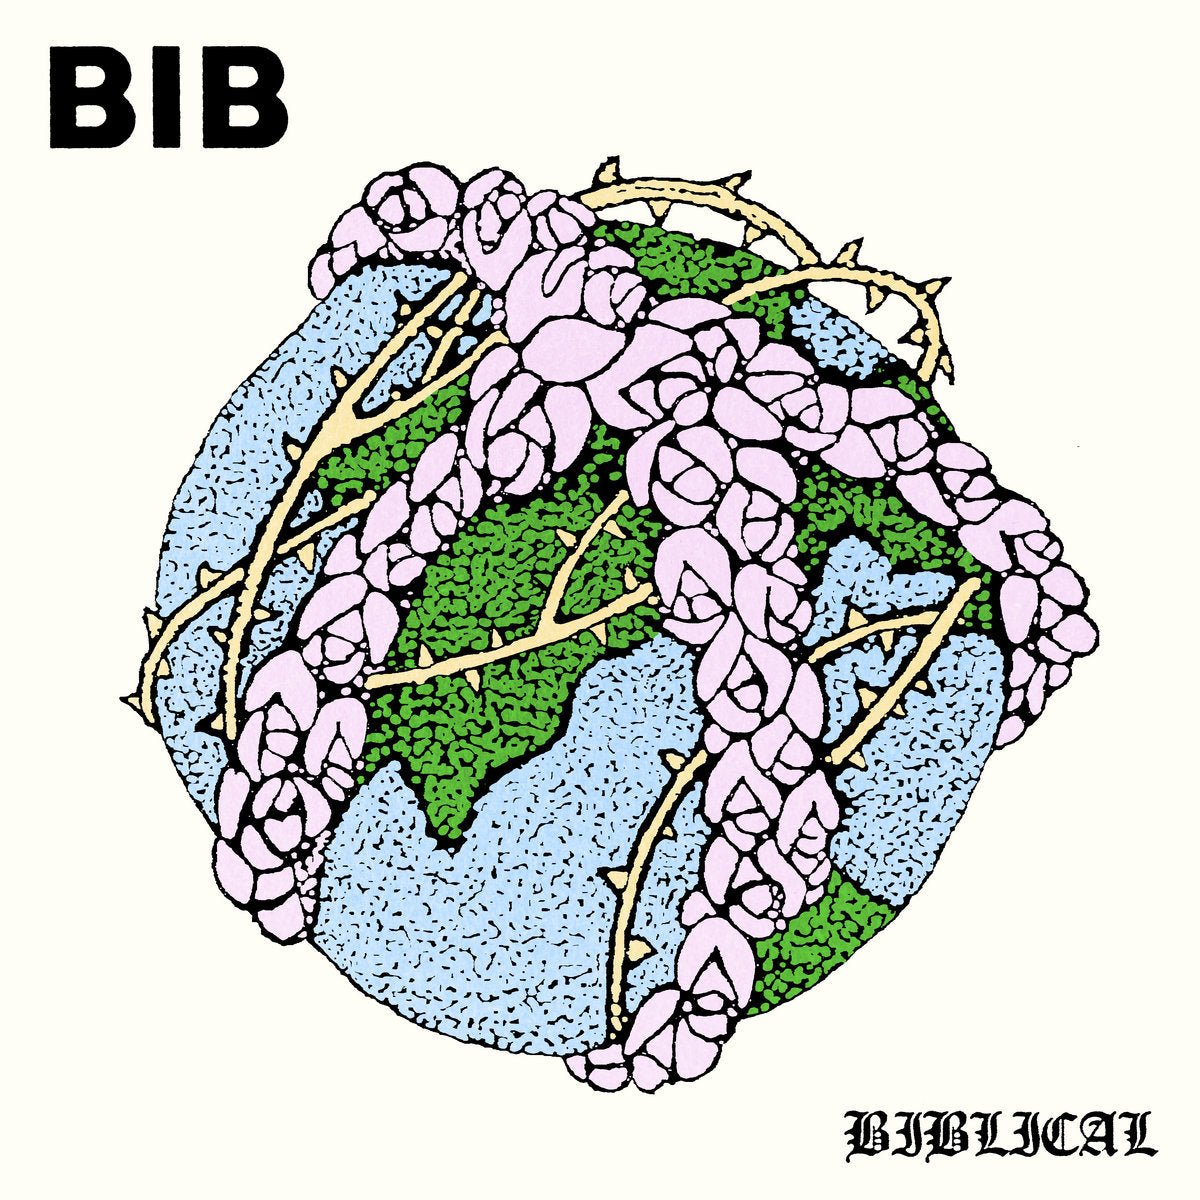 BIB - Biblical 7" - Vinyl - Quality Control